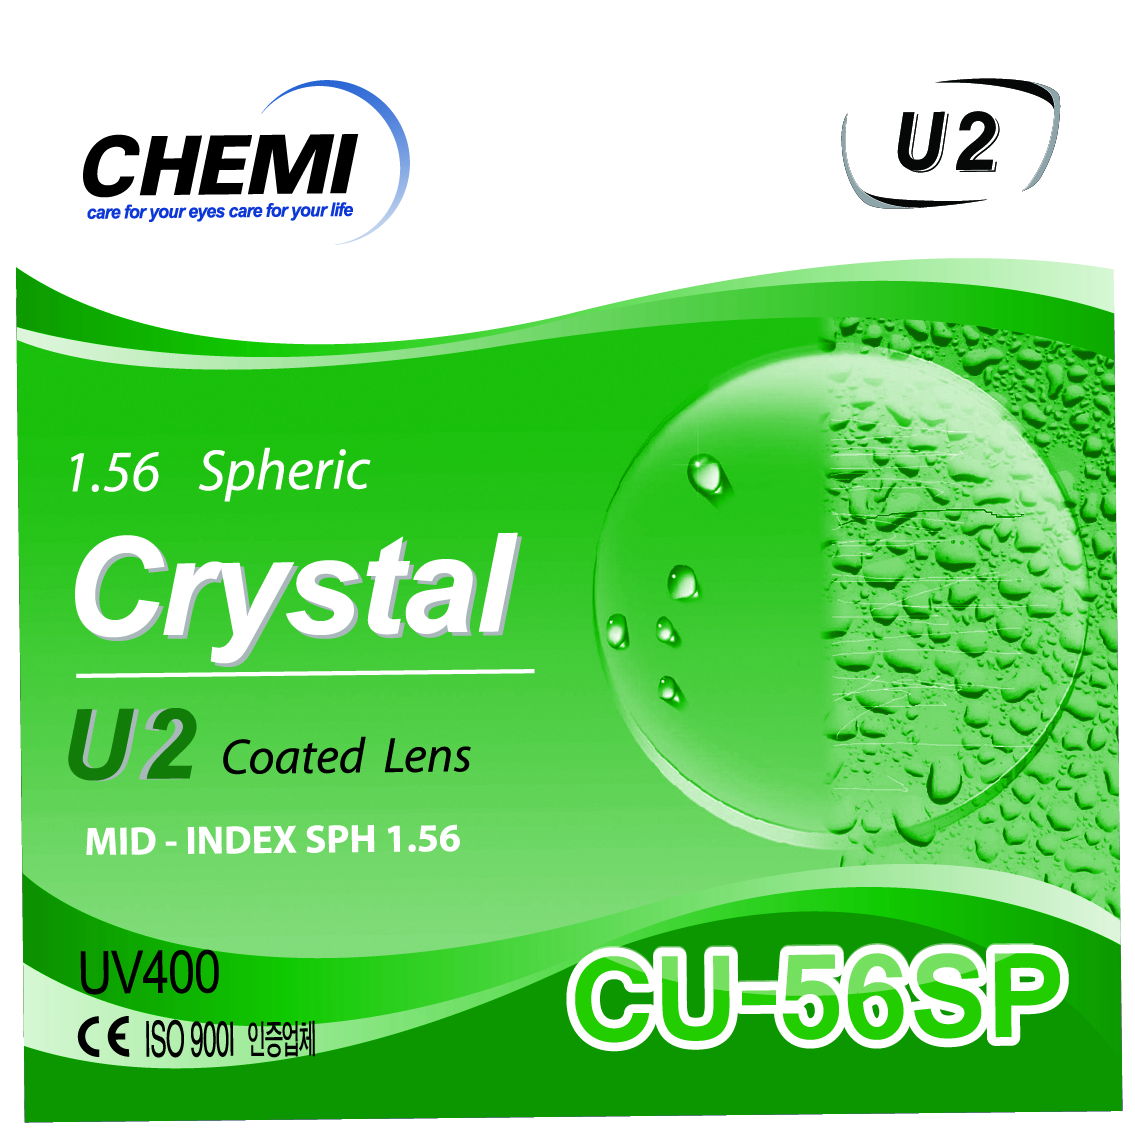 Chemi U2 Crystal 1.56 SP